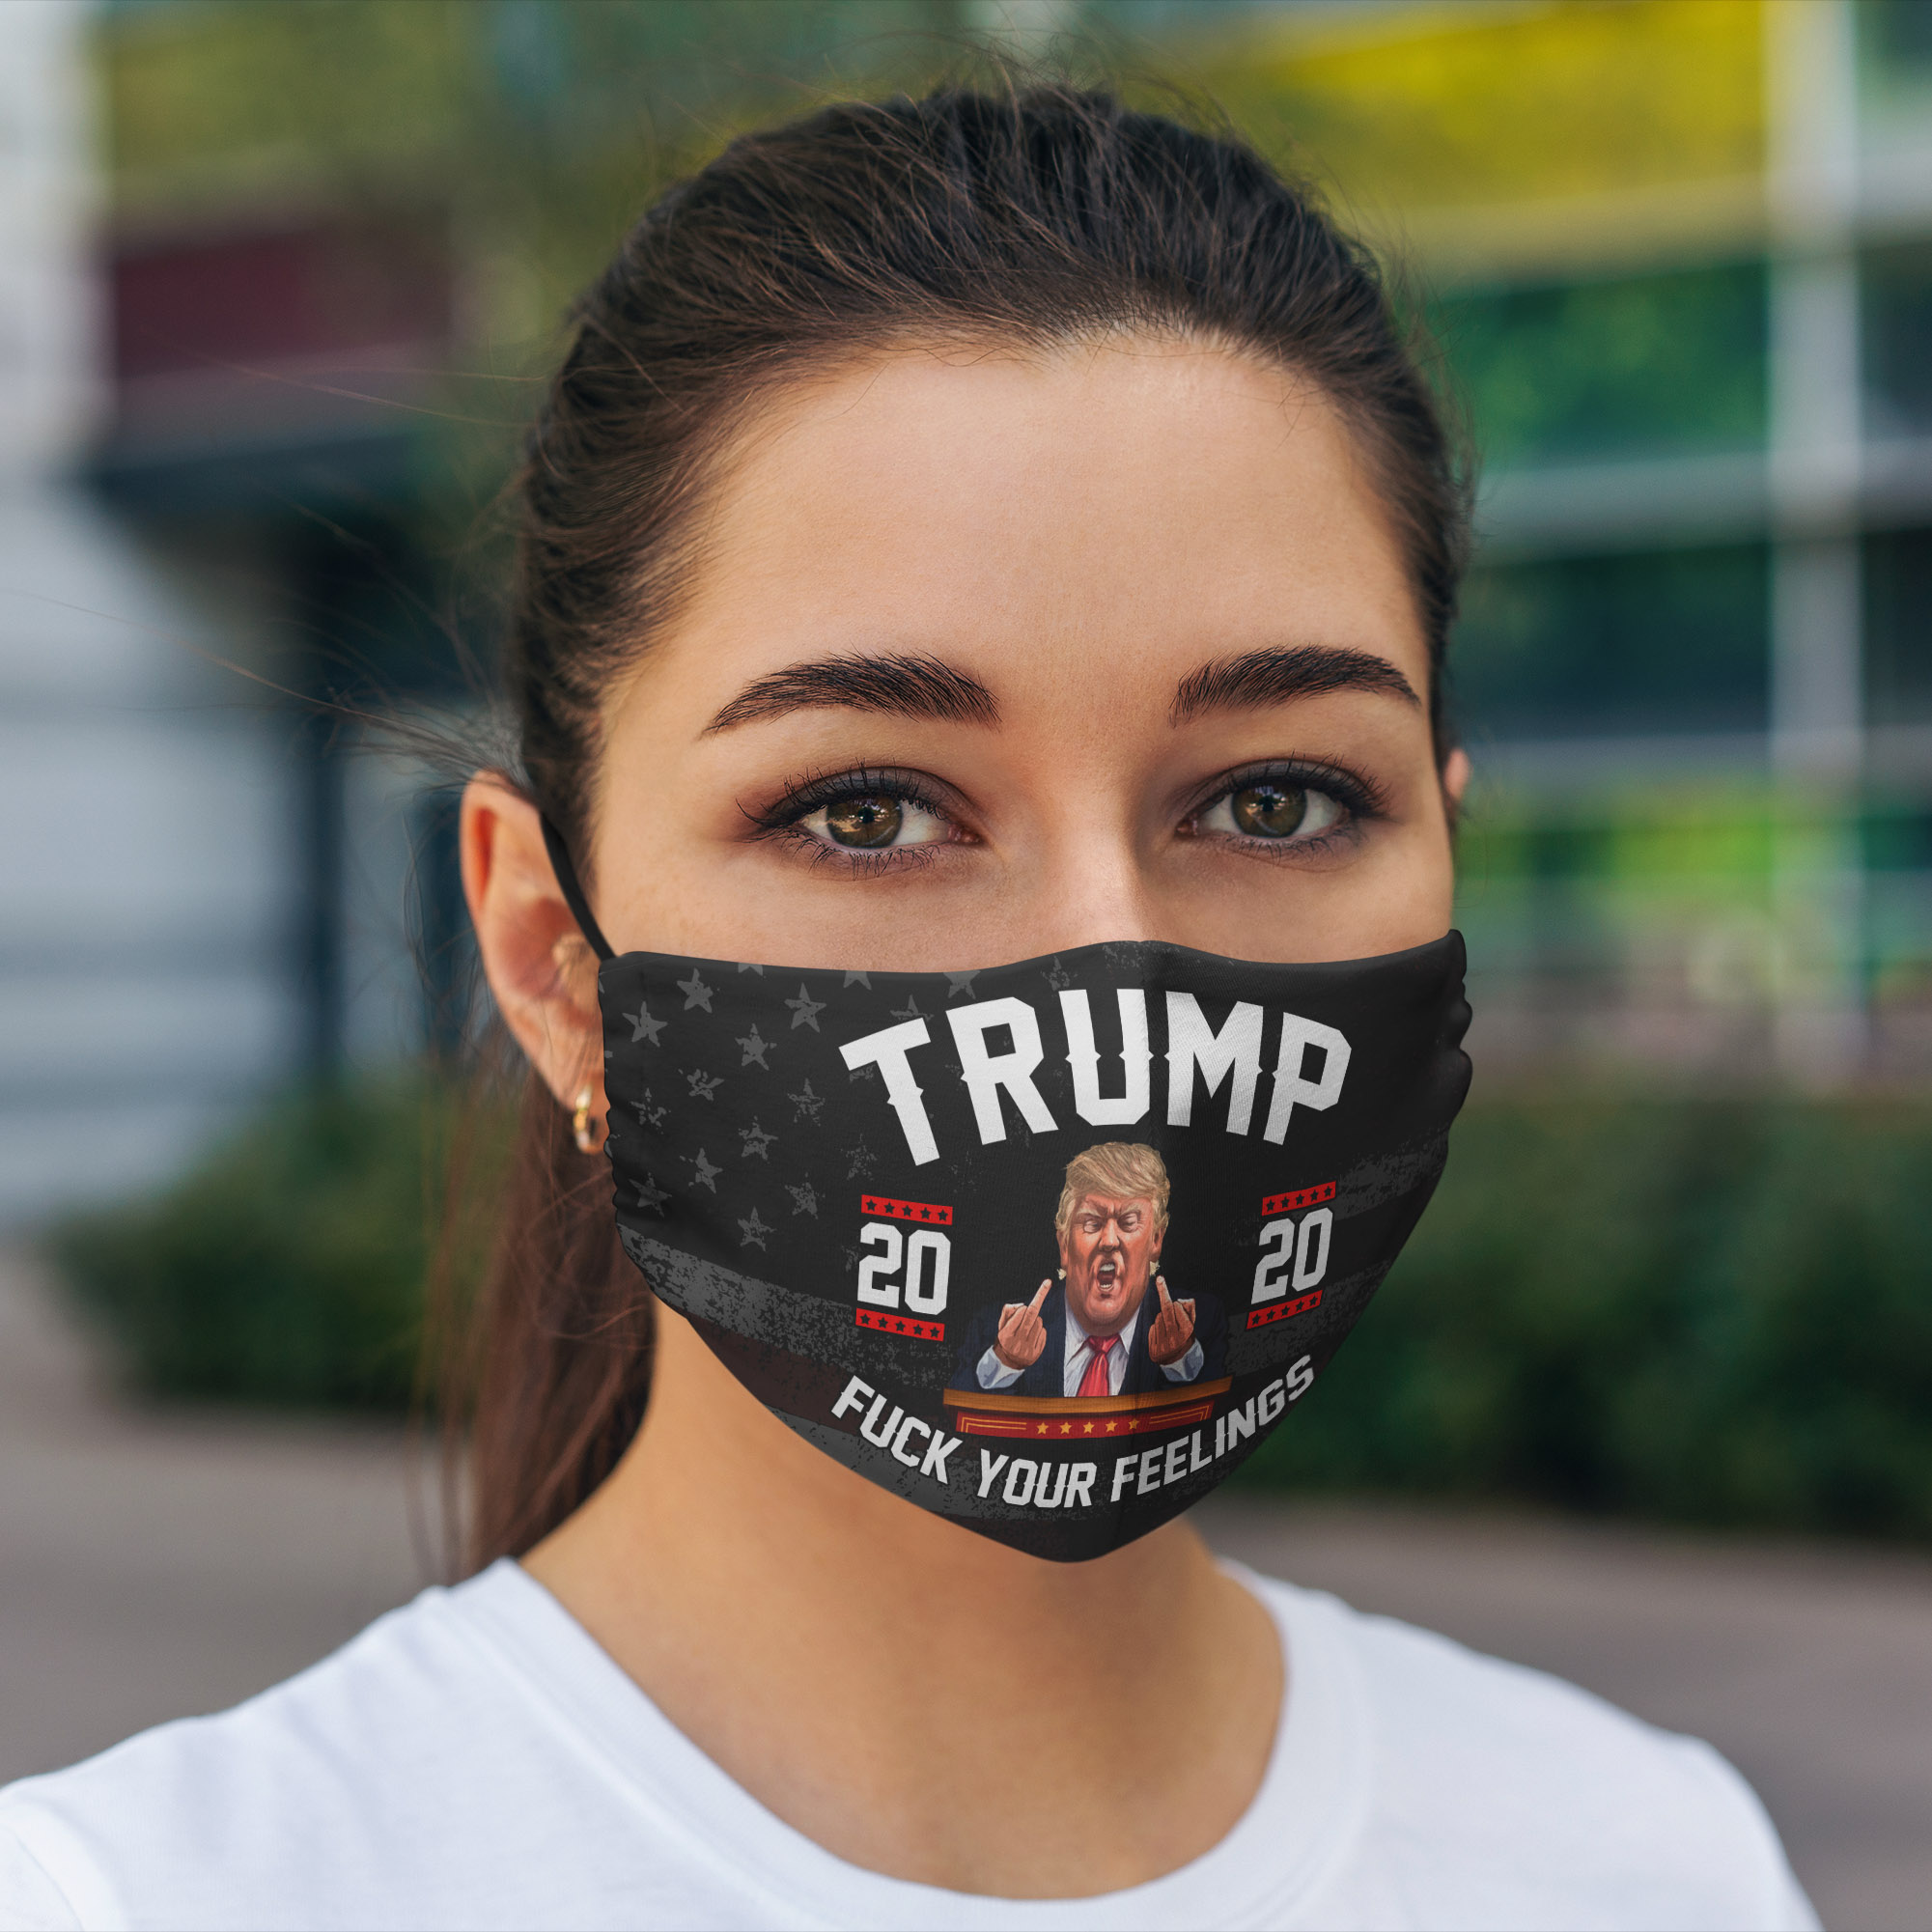 https://vietnamreflections.com/wp-content/uploads/2020/07/Trump-2020-fuck-you-feelings-anti-pollution-face-mask.jpg